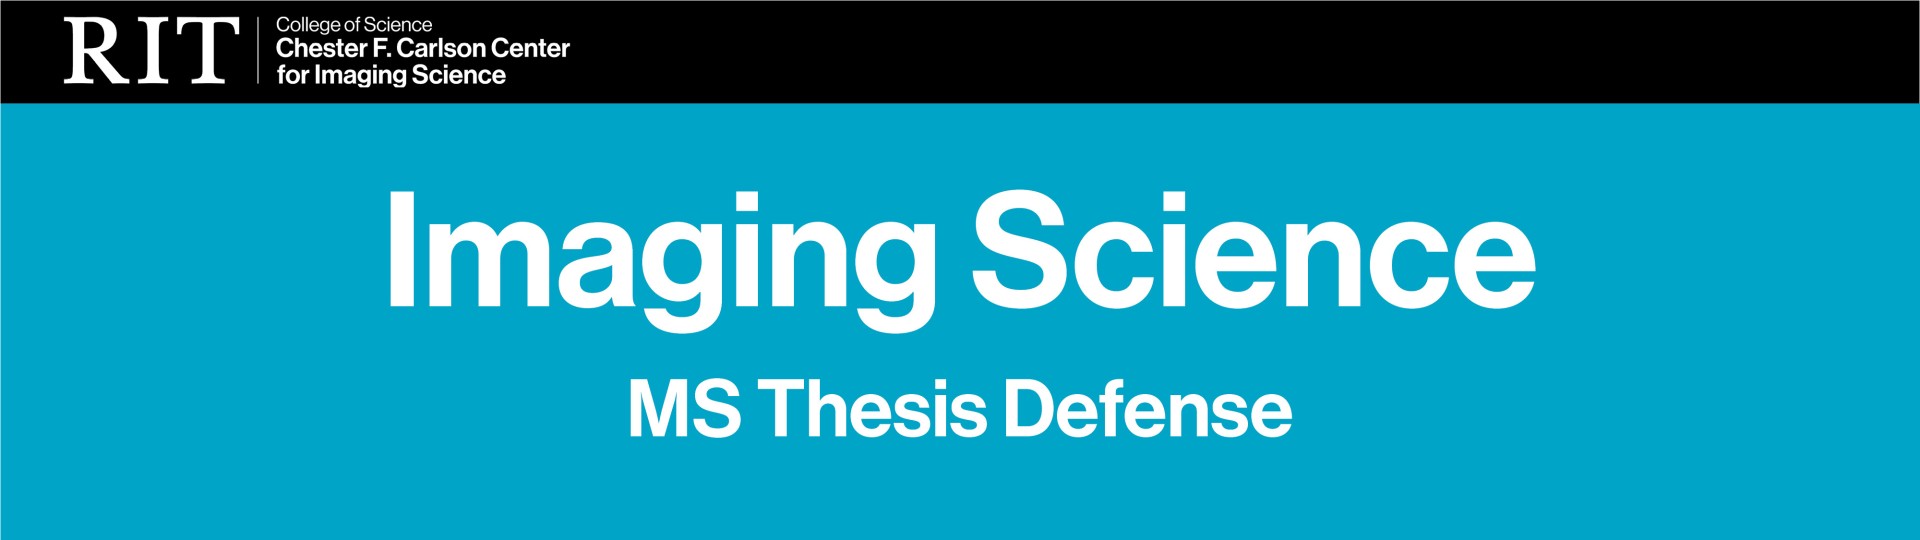 Imaging Sciences MS Thesis Defense